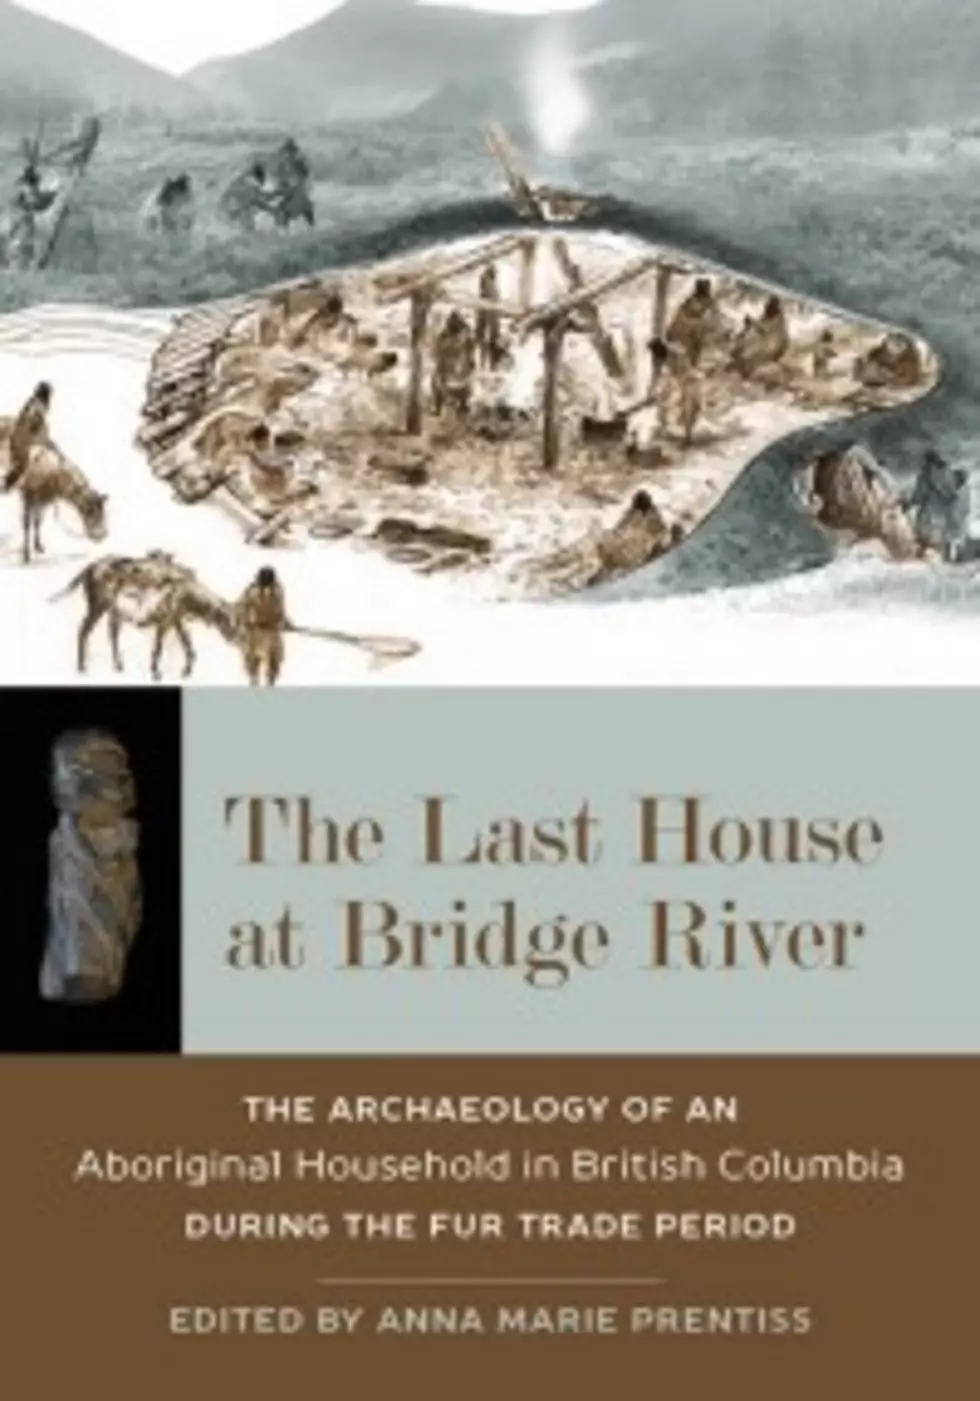 UM Anthropologist Explores Indigenous Lifestyles of Fur Trade Era in New Book